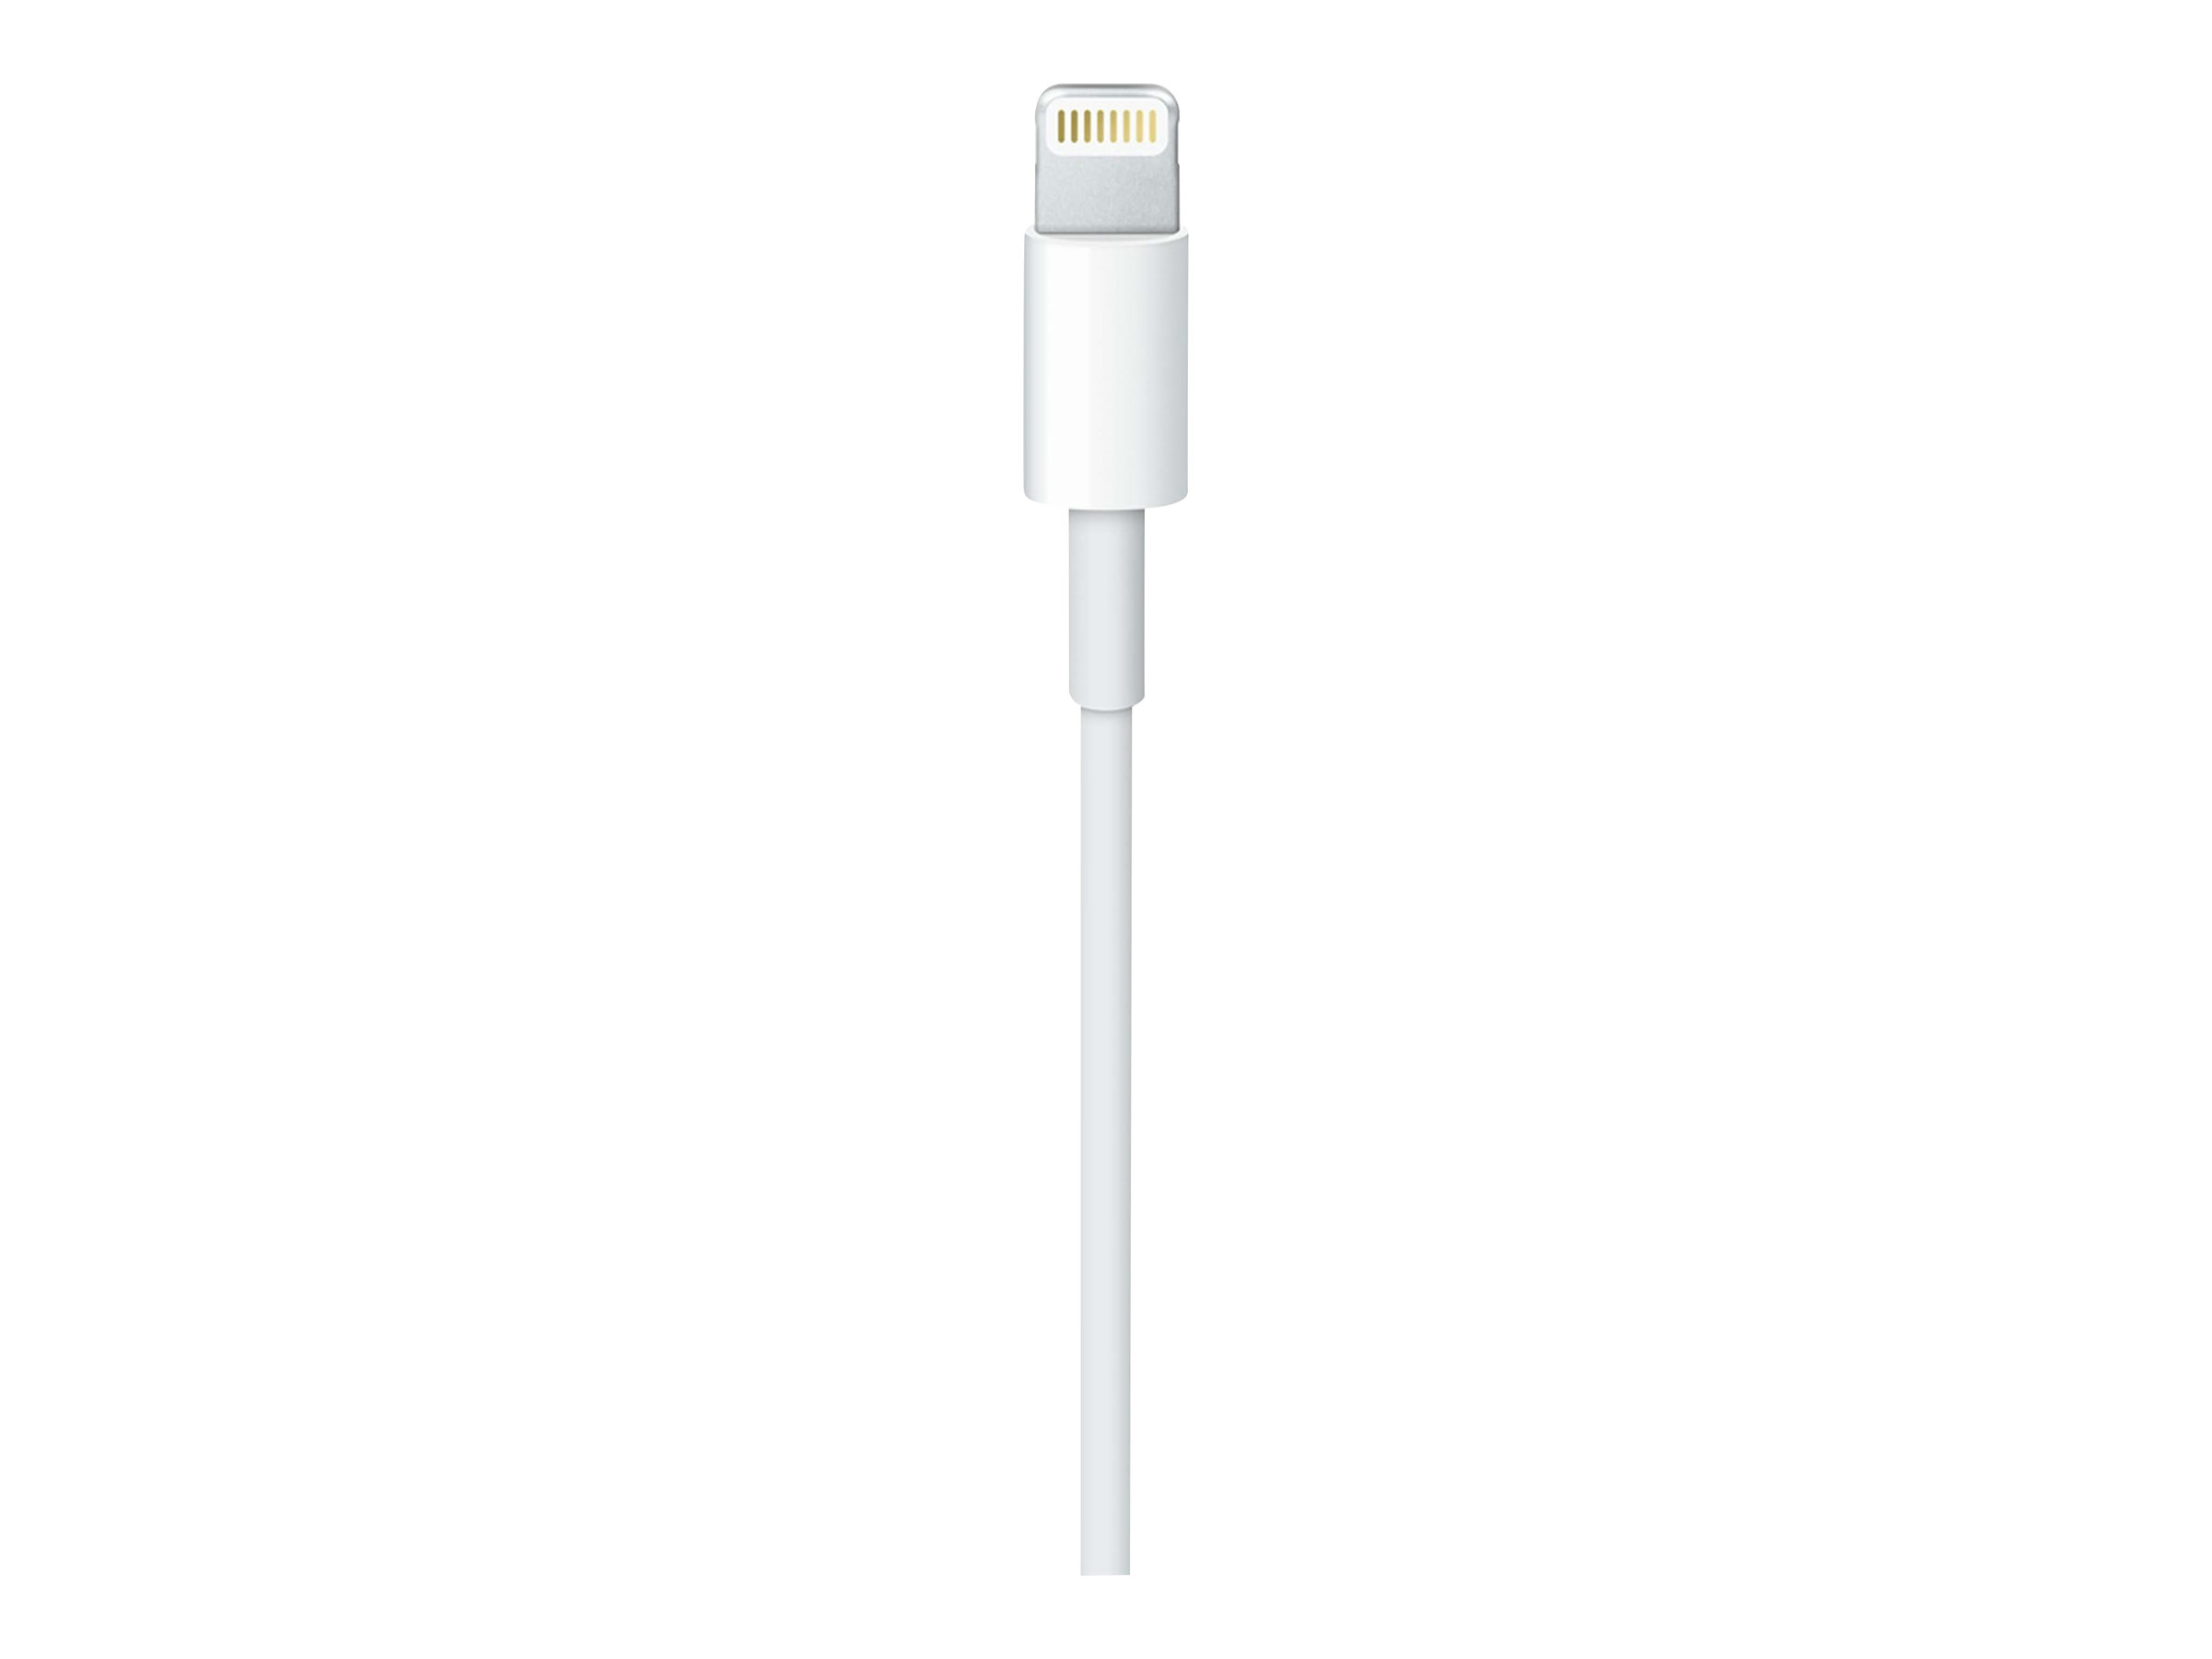 Apple USB-C to Lightning Cable - Lightning-Kabel - 24 pin USB-C männlich zu Lightning männlich - 1 m - für Apple iPad/iPhone/iPod (Lightning)